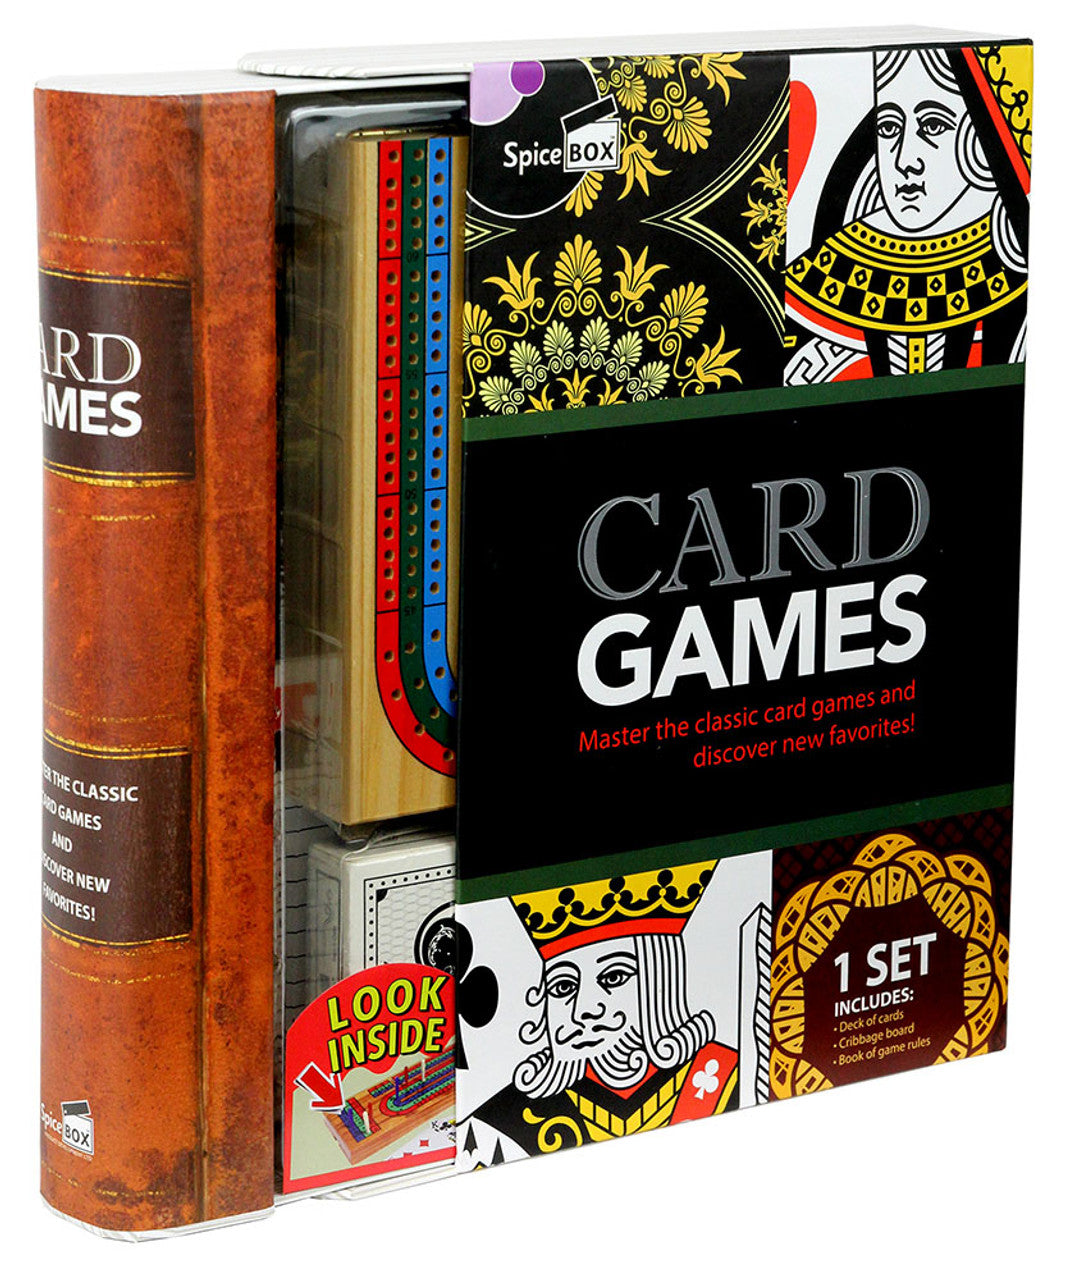 Spicebox Gift Set Card Games